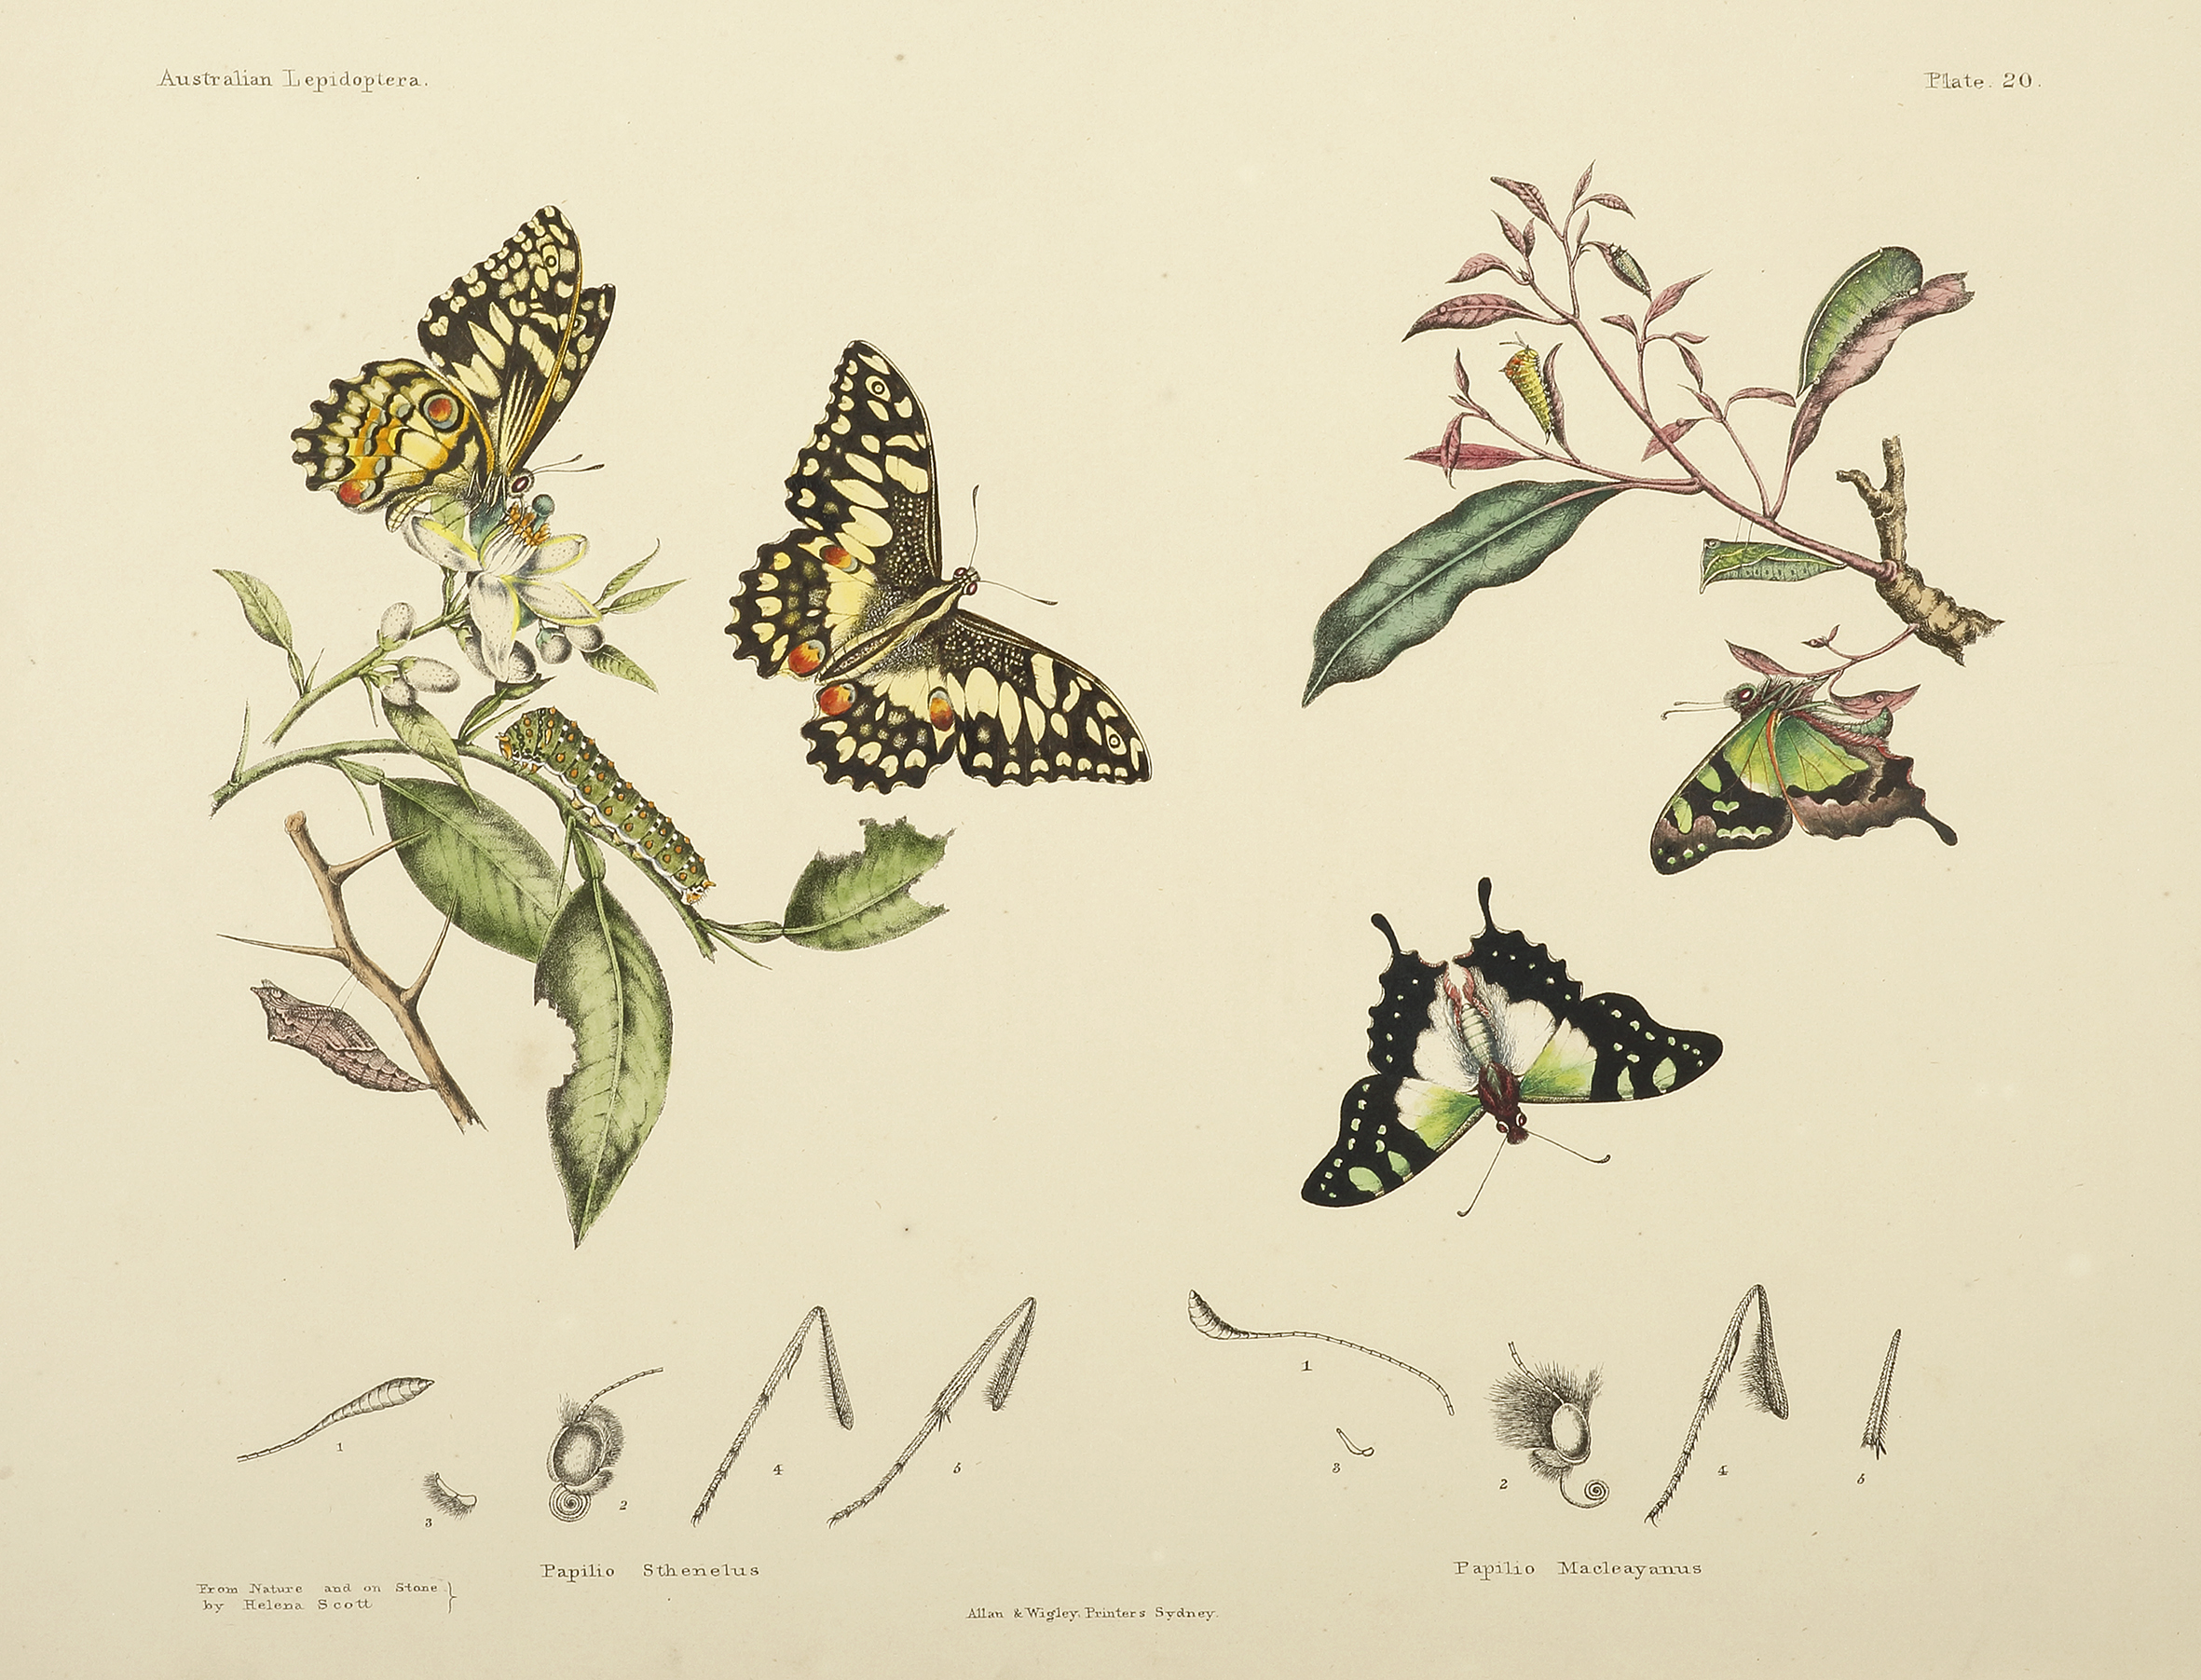 Papilio Sthenelus [Papilio demoleus], [Chequered Swallowtail], Papilio Macleayanus [Graphium macleayanum], [Macleay's Swallowtail] - Antique Print from 1893